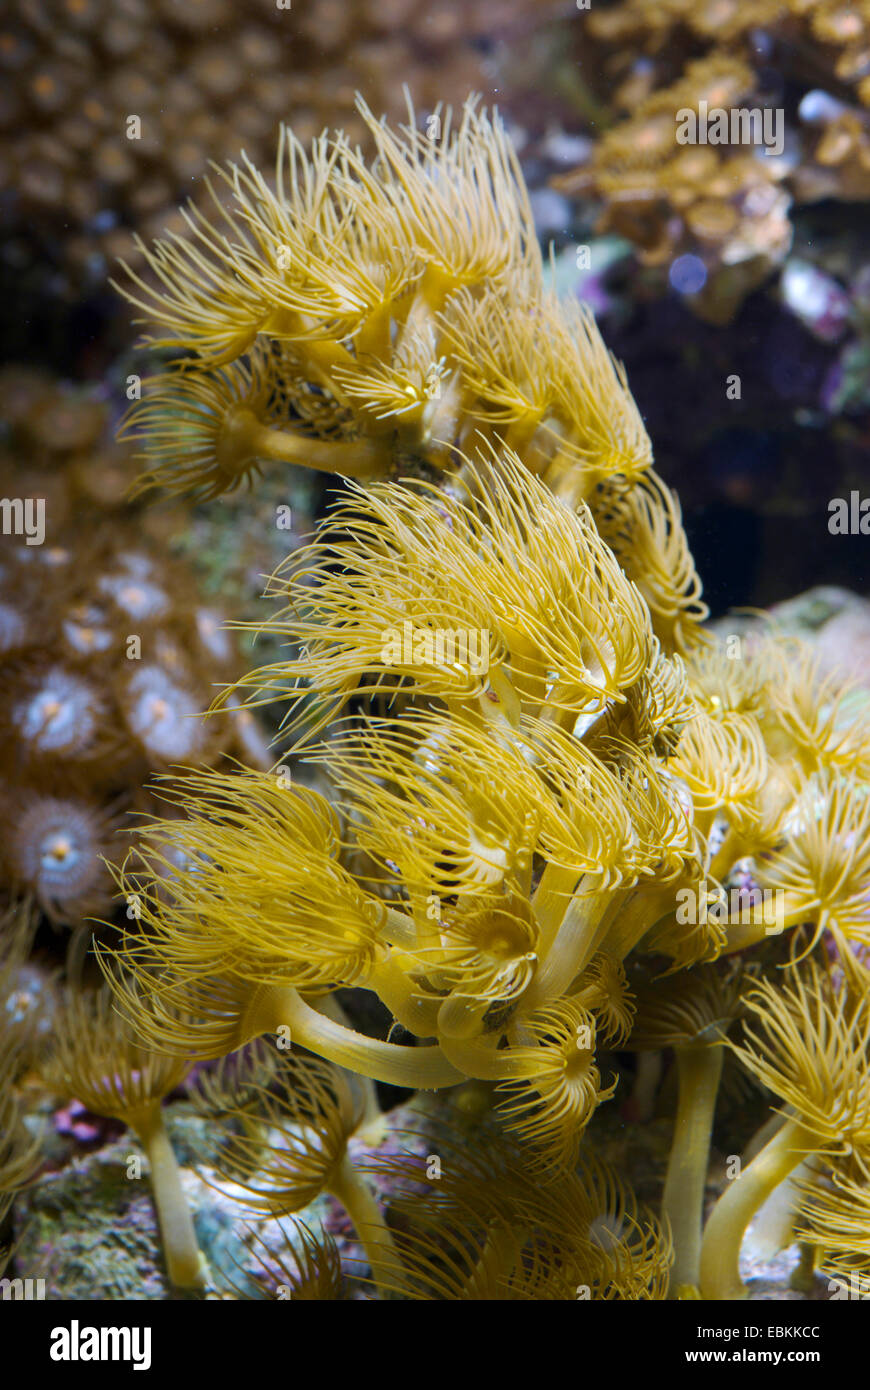 Giallo zoanthid commensale, incrostanti giallo anemone marittimo (Parazoanthus axinellae), Colonia Foto Stock